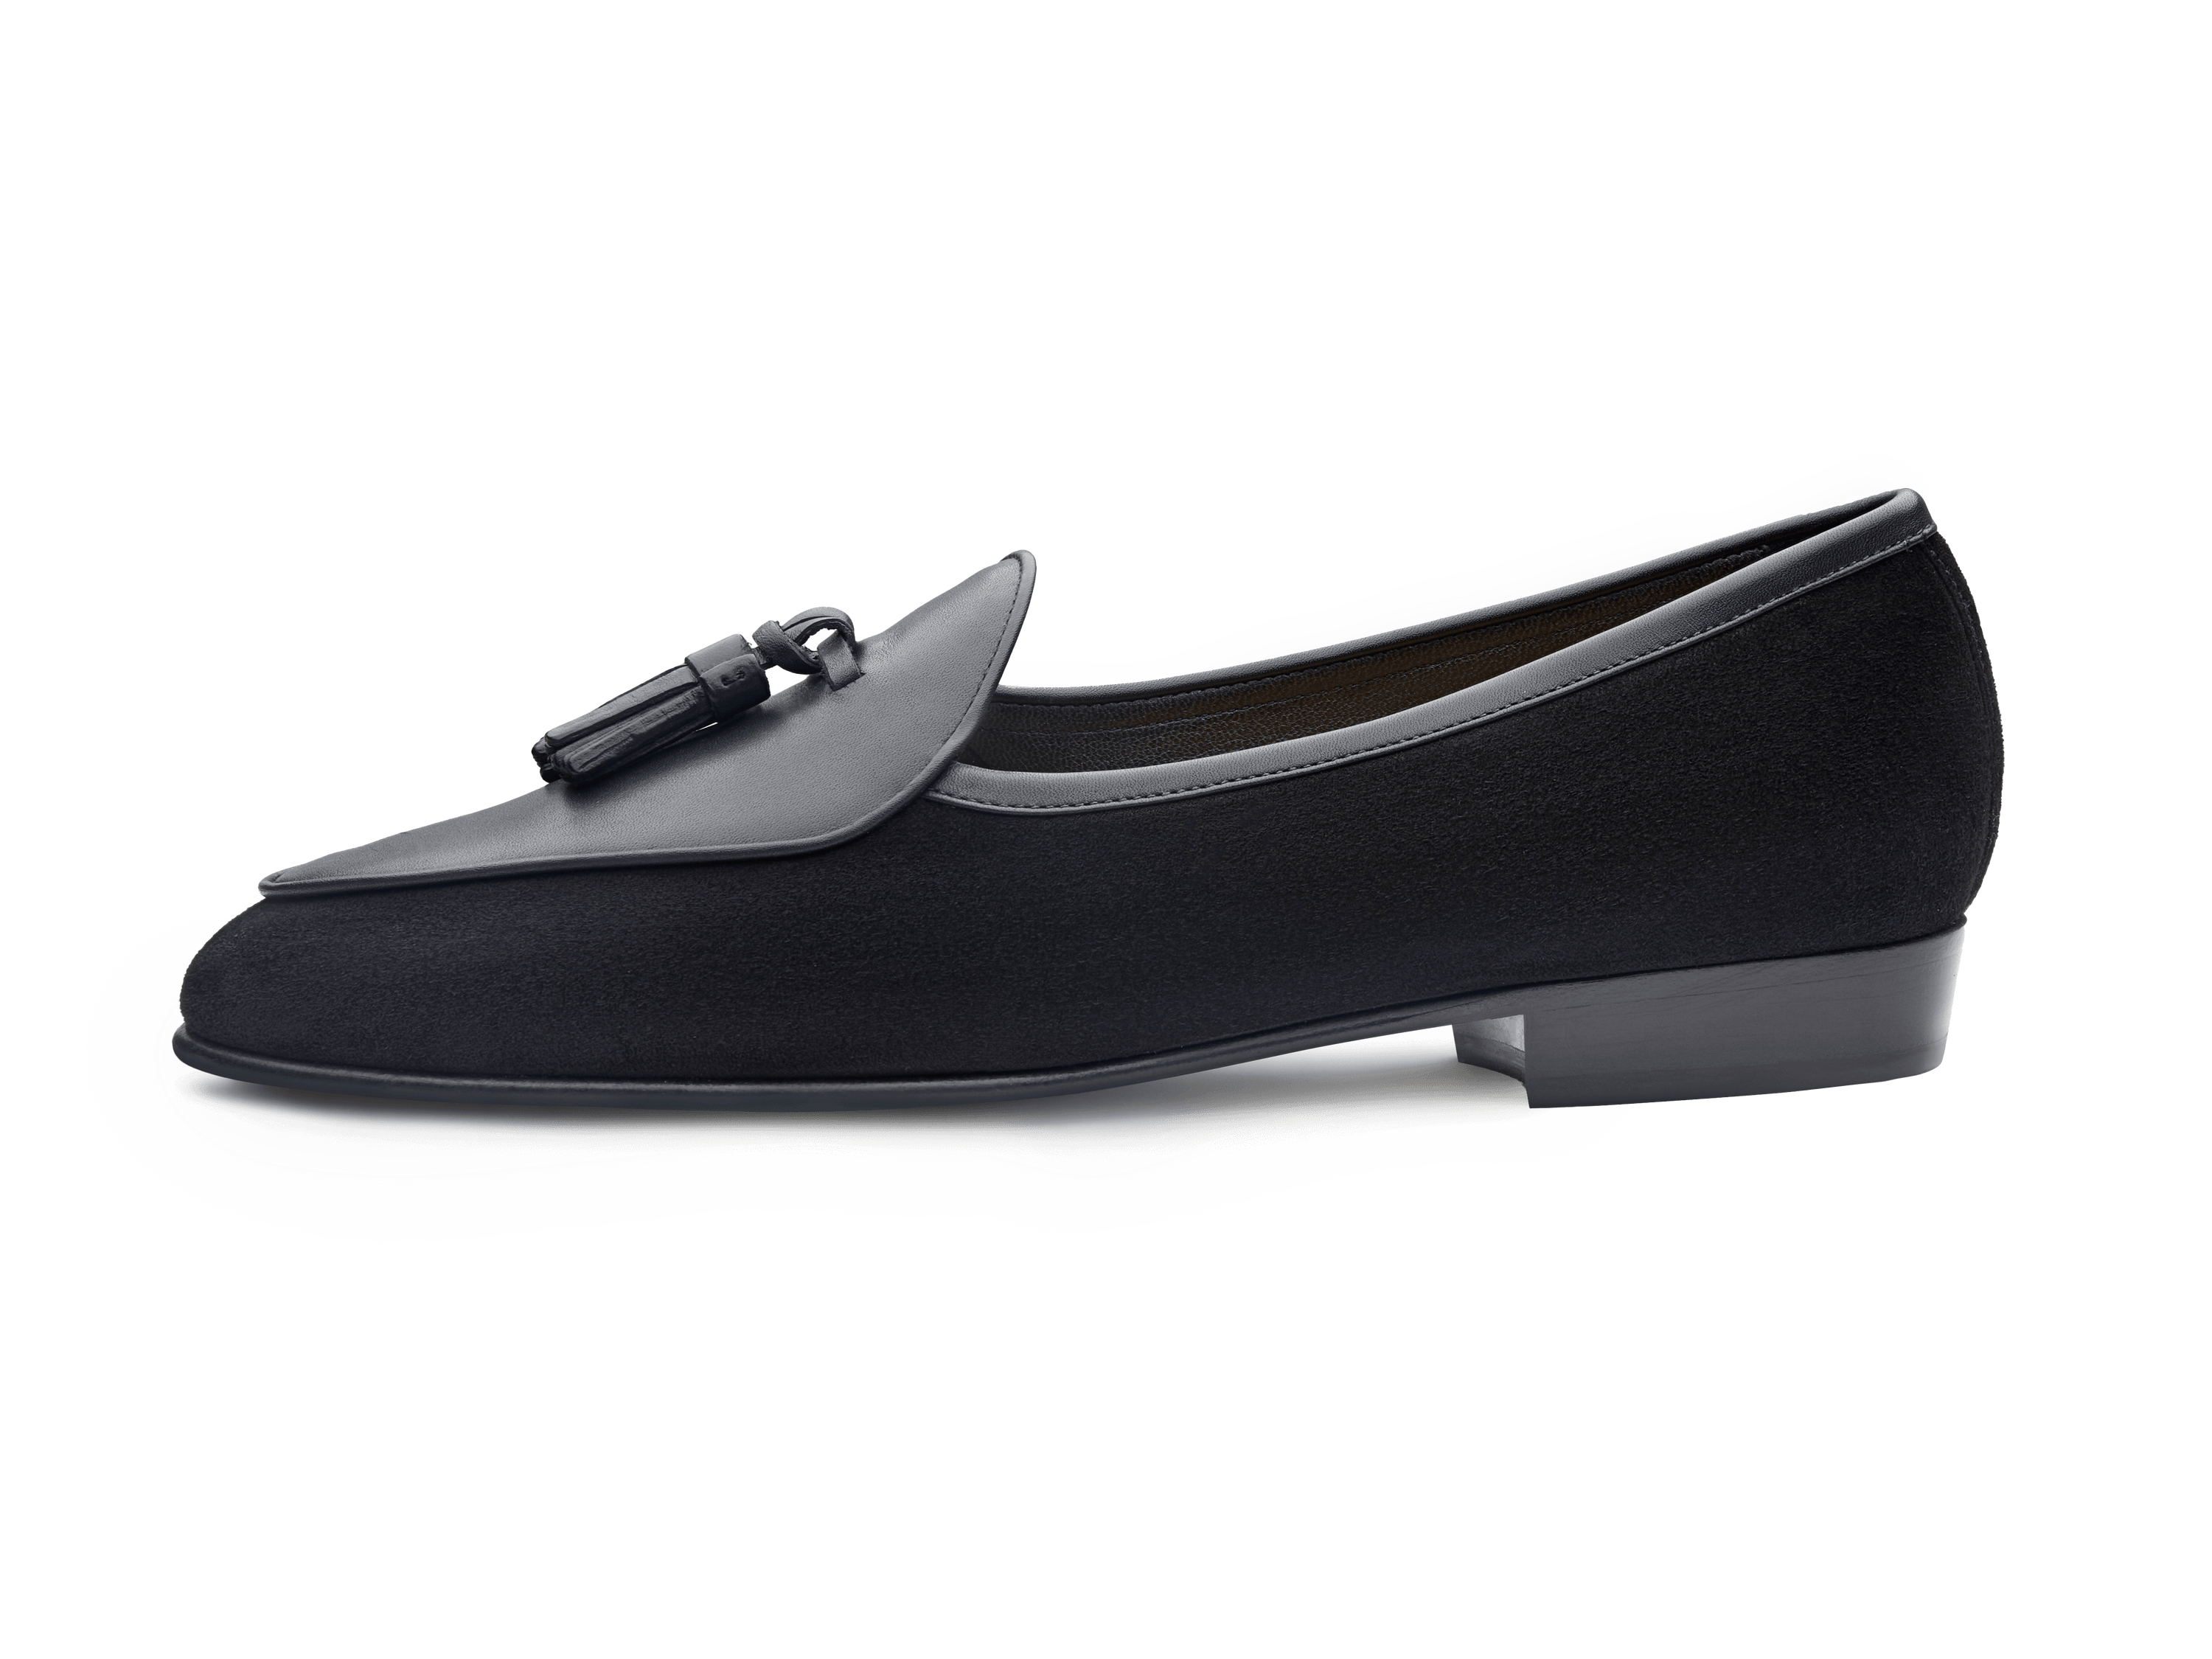 Sagan Classic Tassel Loafers in Black Suede and Black Drape Calf